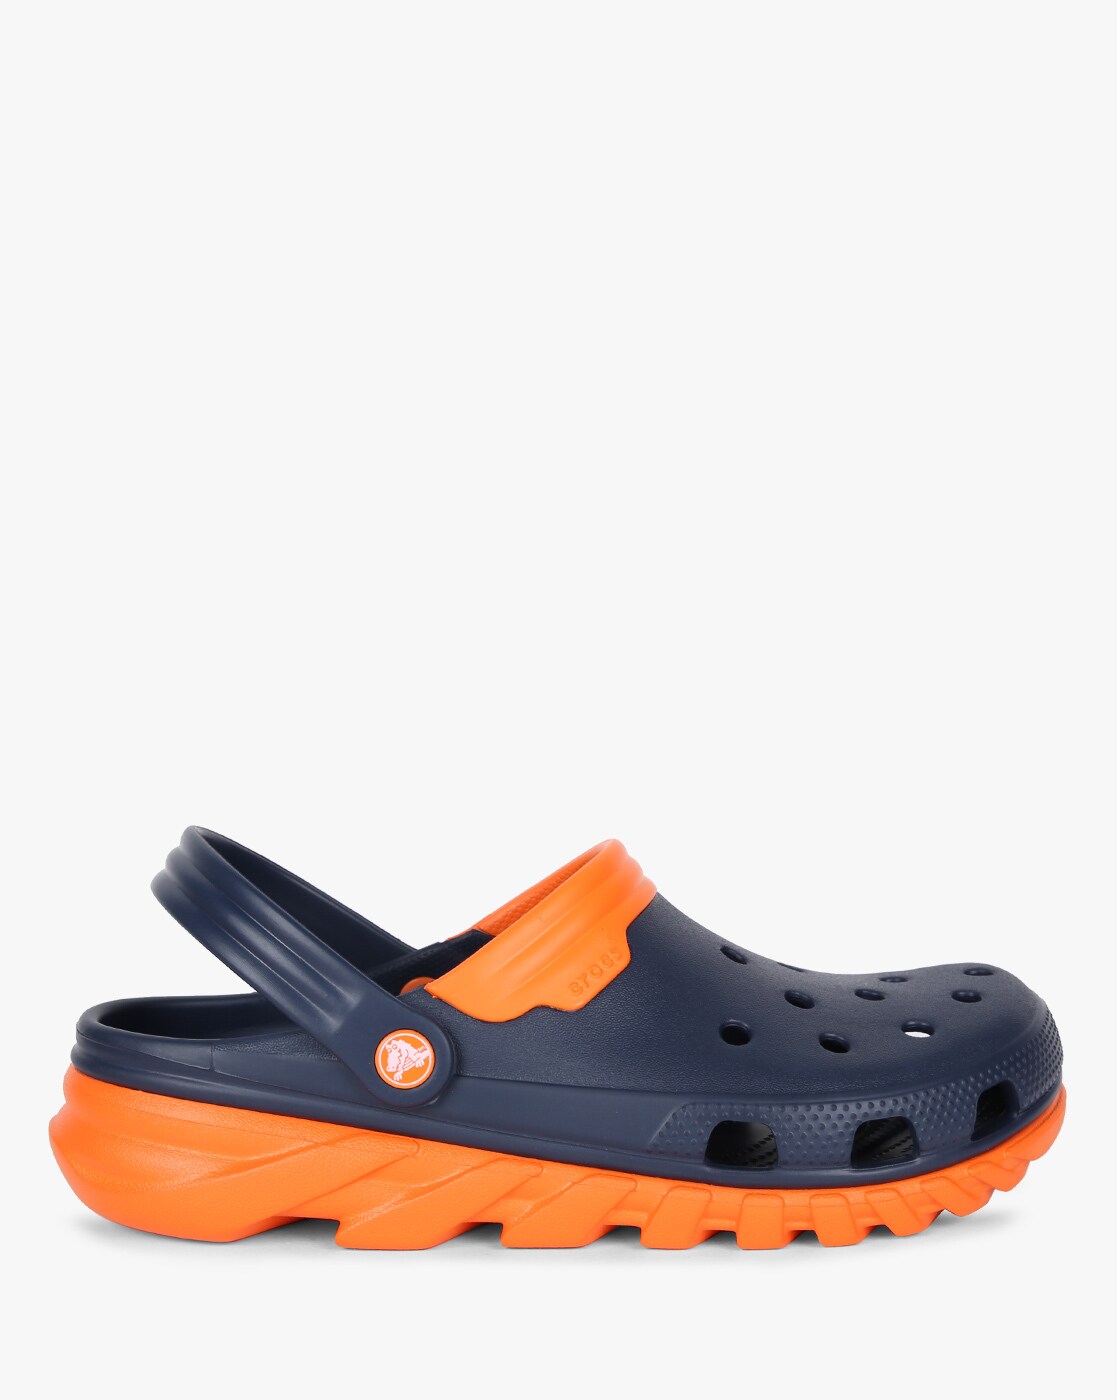 crocs orange and blue